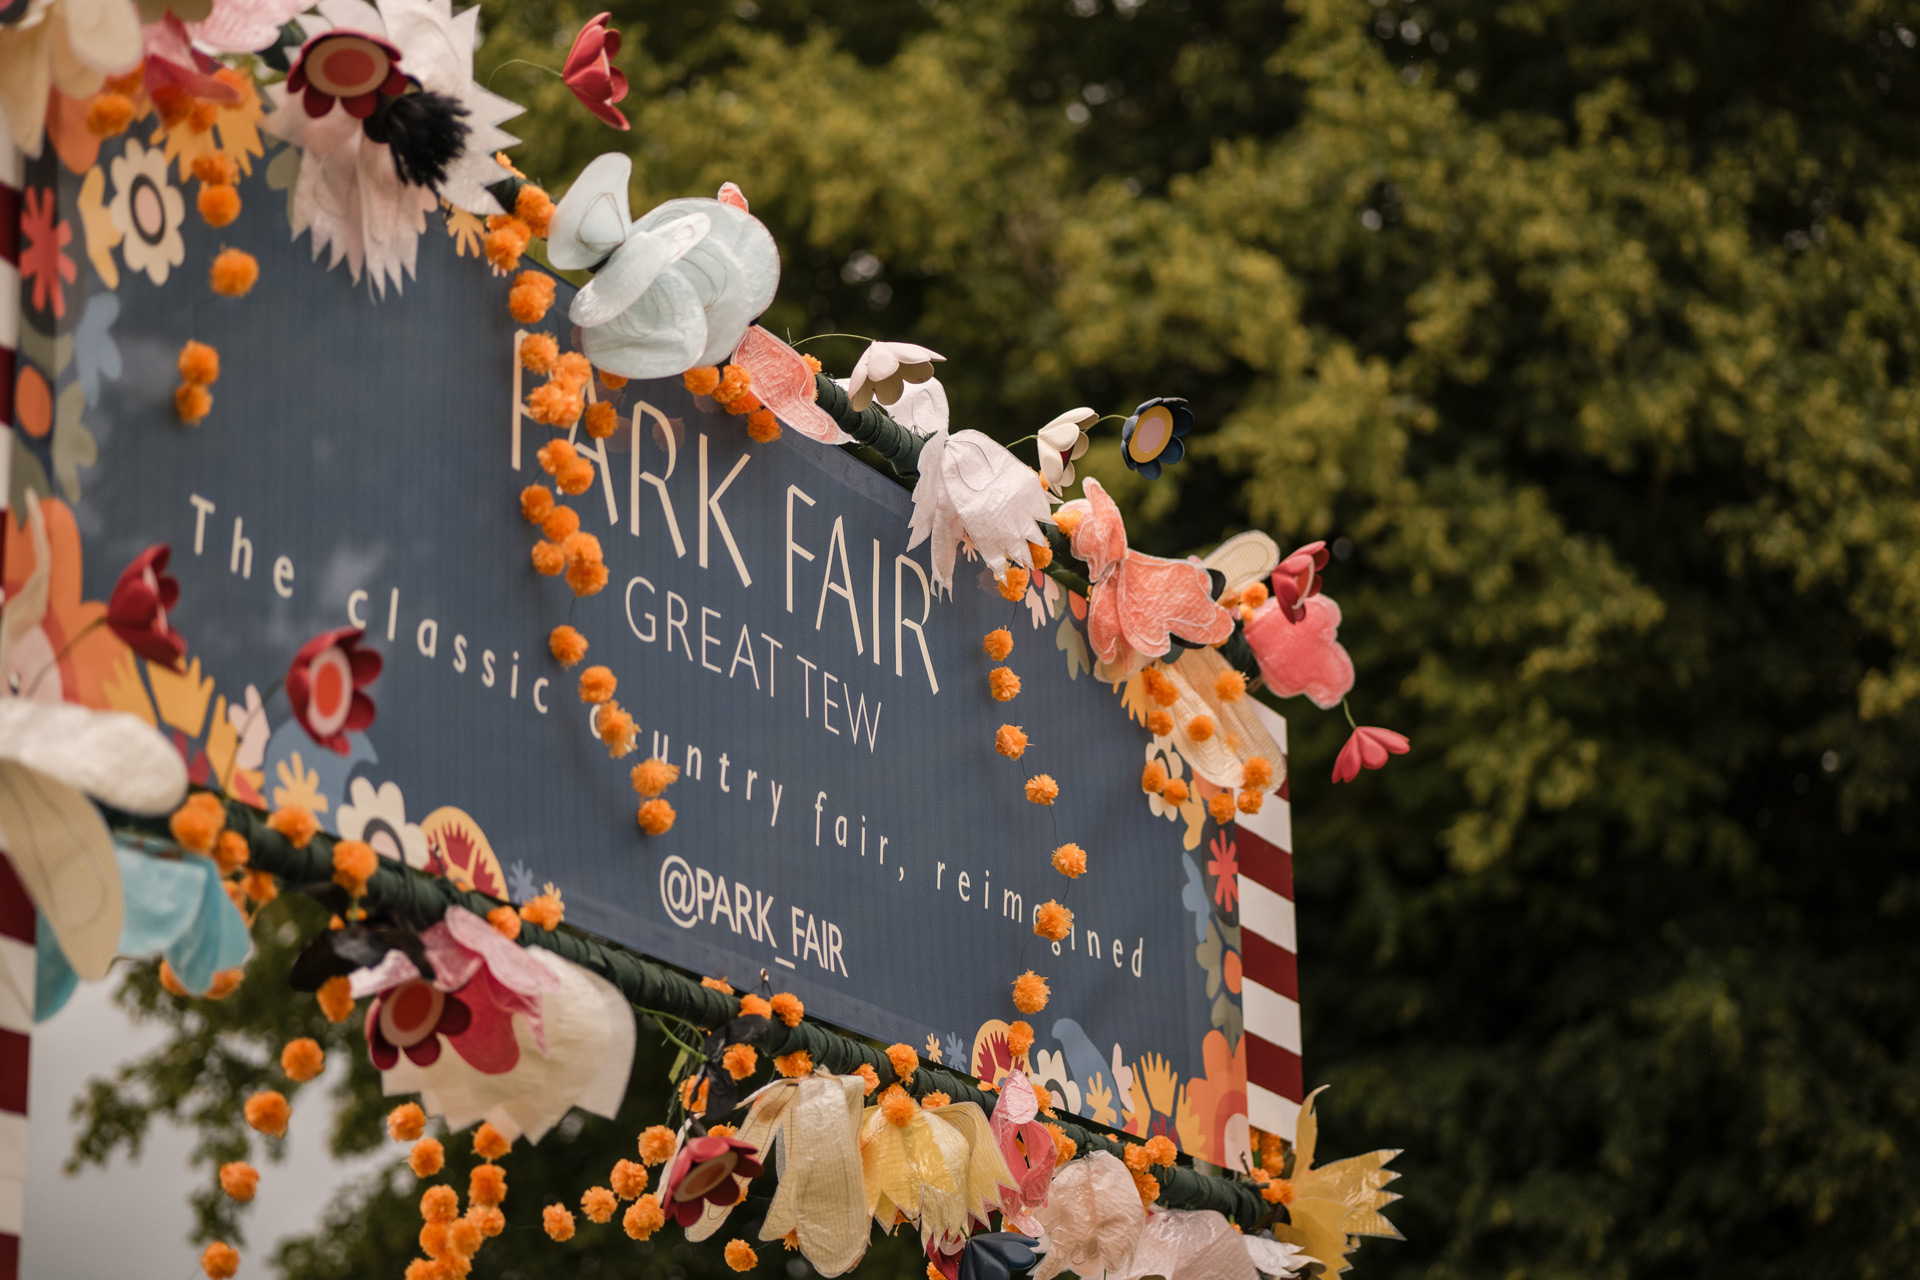 Black Park Fair sign bordered by orange flower garlands